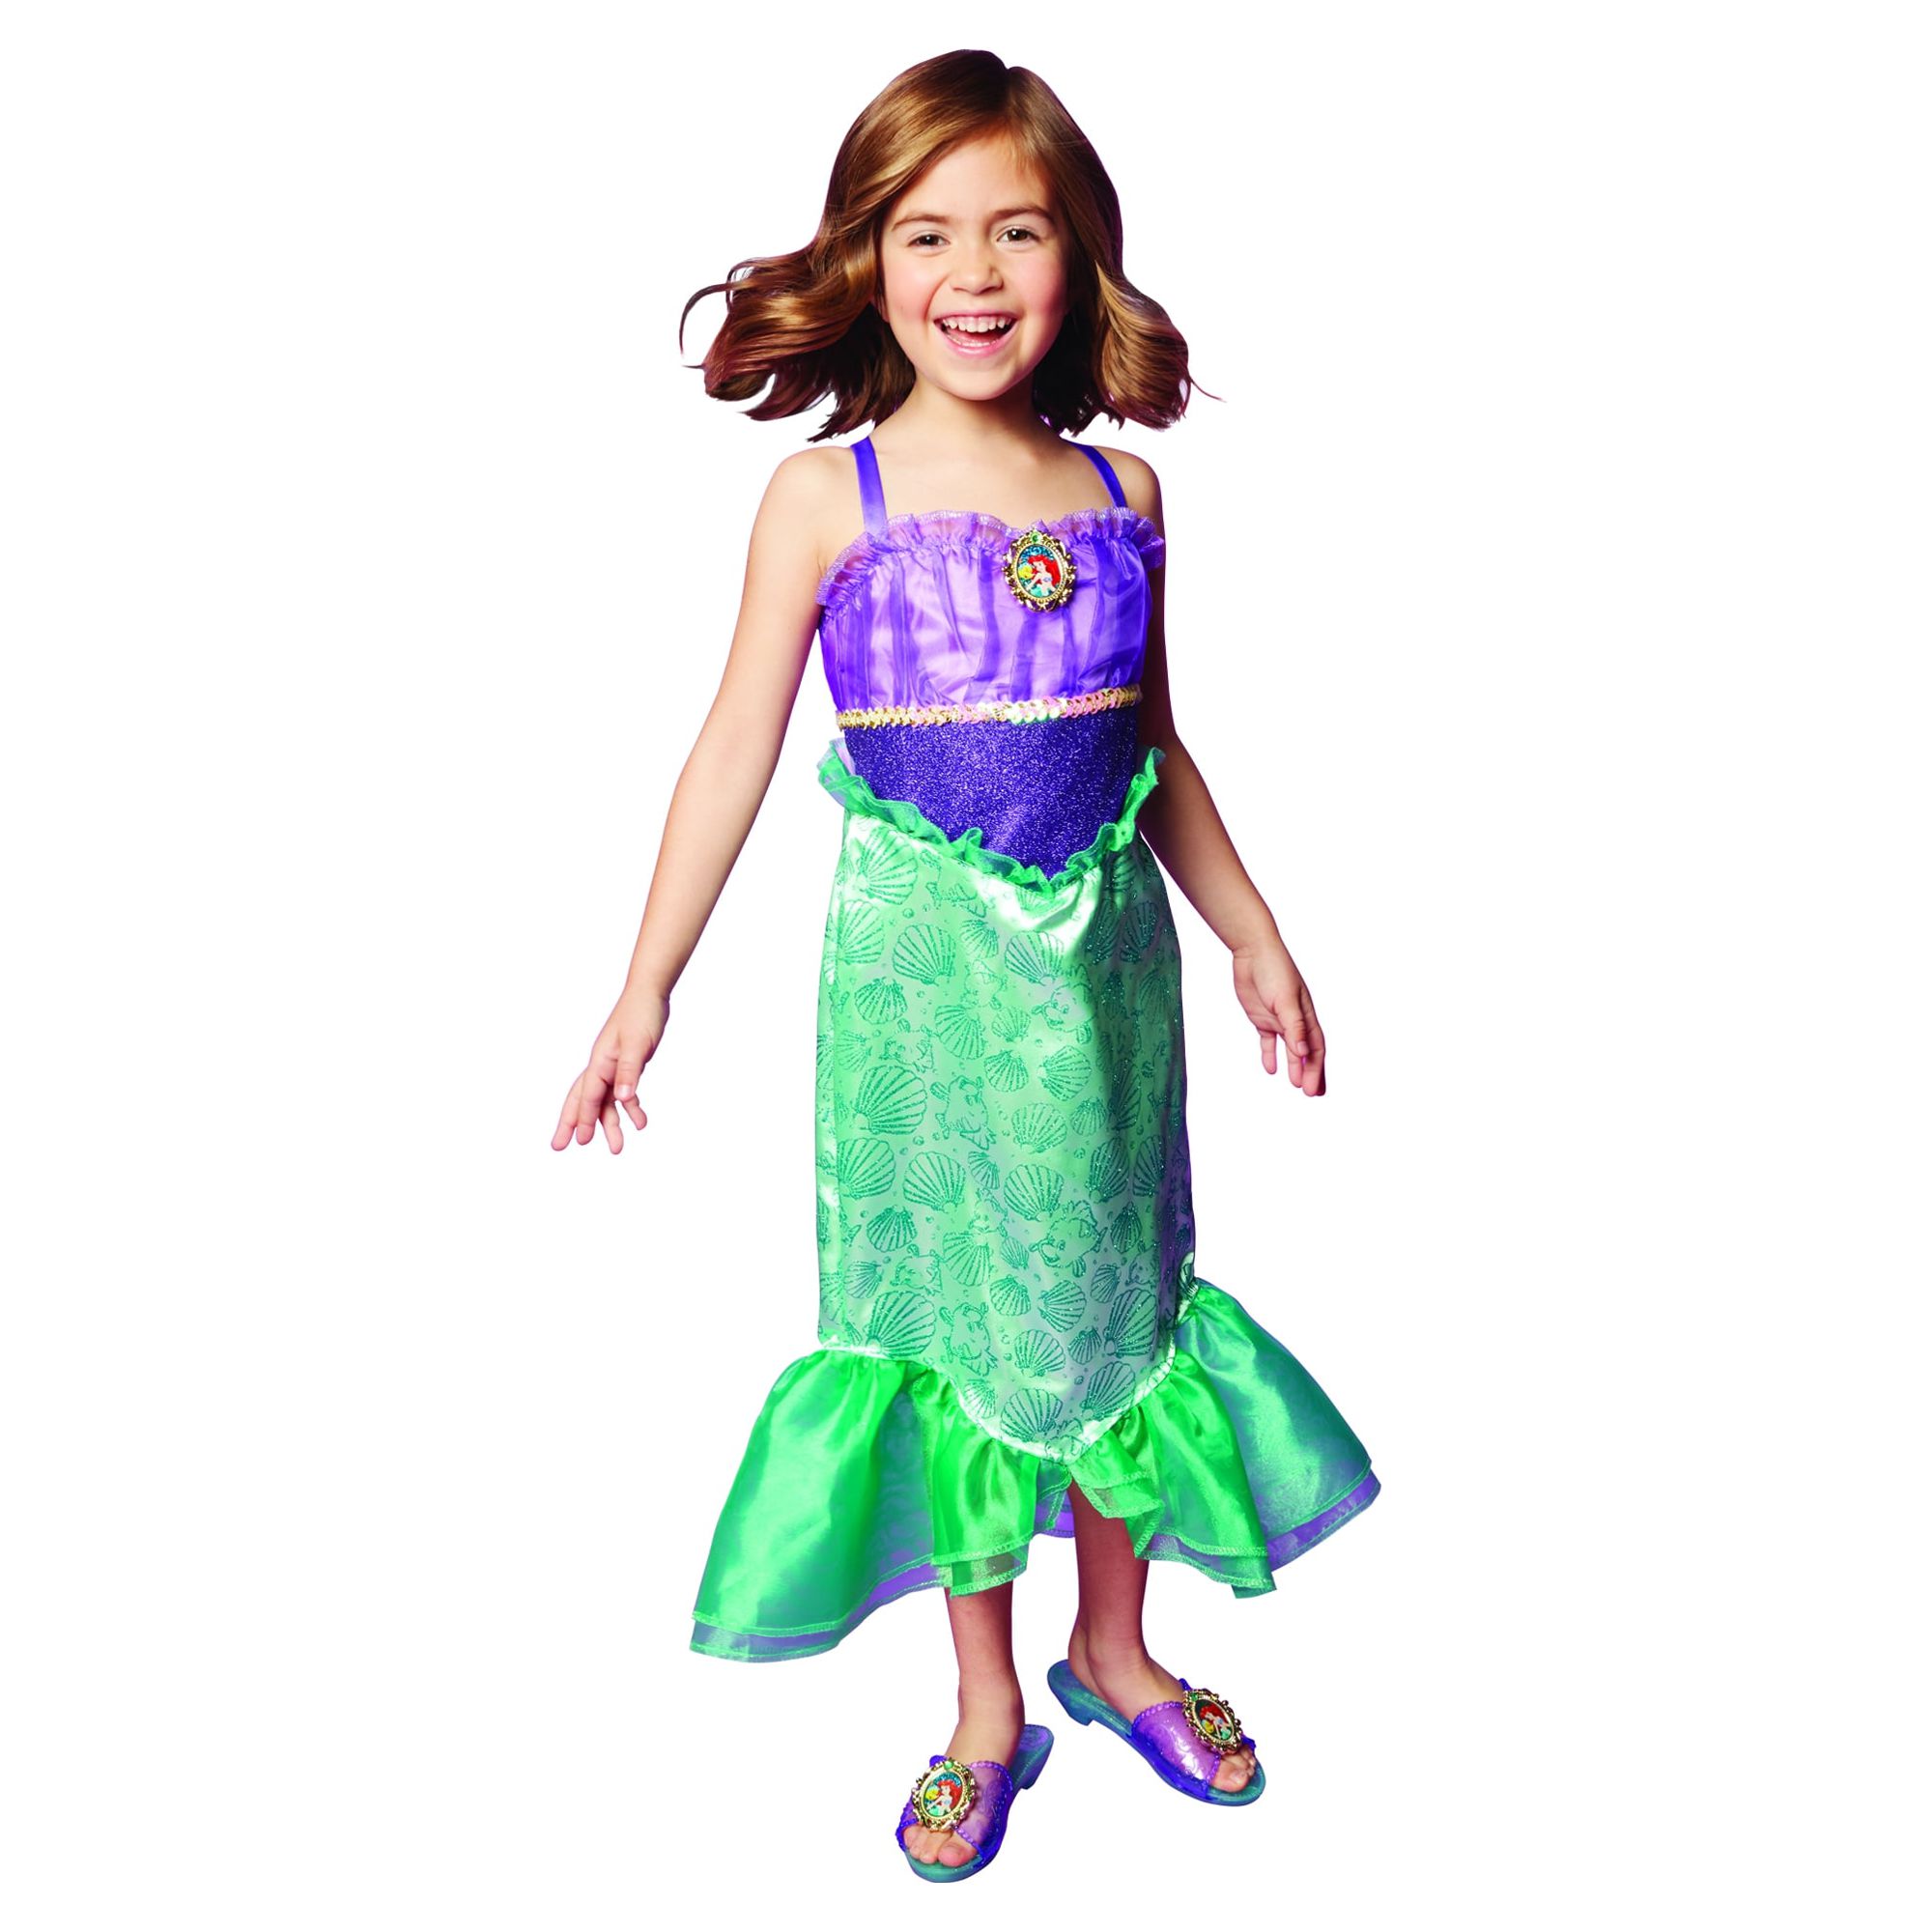 Disney Princess Ariel Children's Dress Perfect for Halloween or Dress Up - image 1 of 6